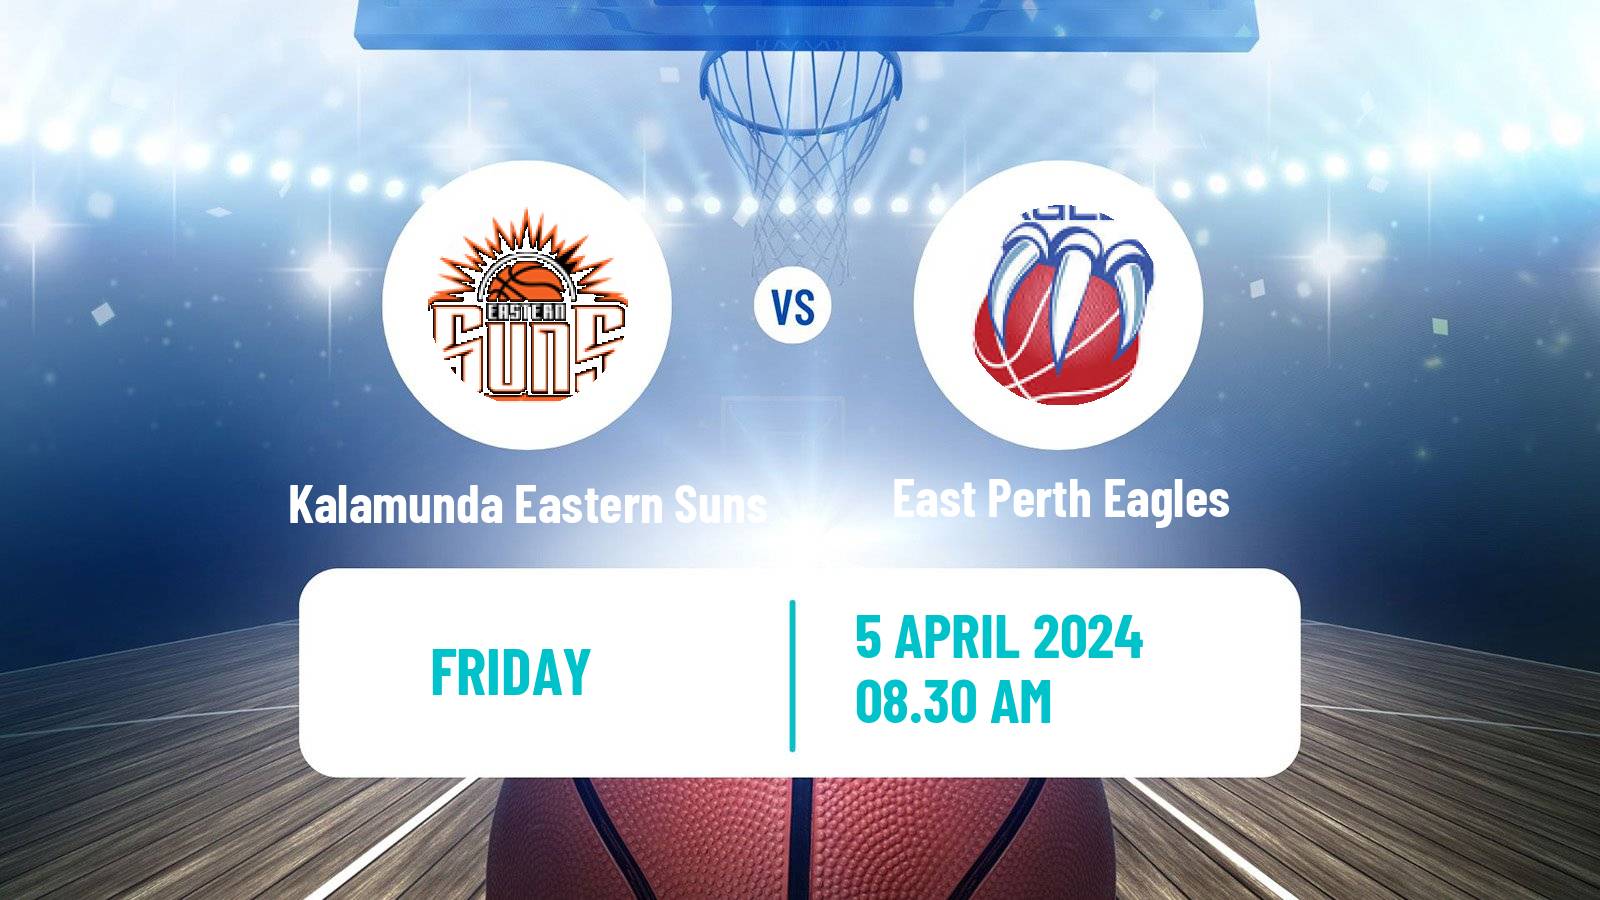 Basketball Australian NBL1 West Kalamunda Eastern Suns - East Perth Eagles